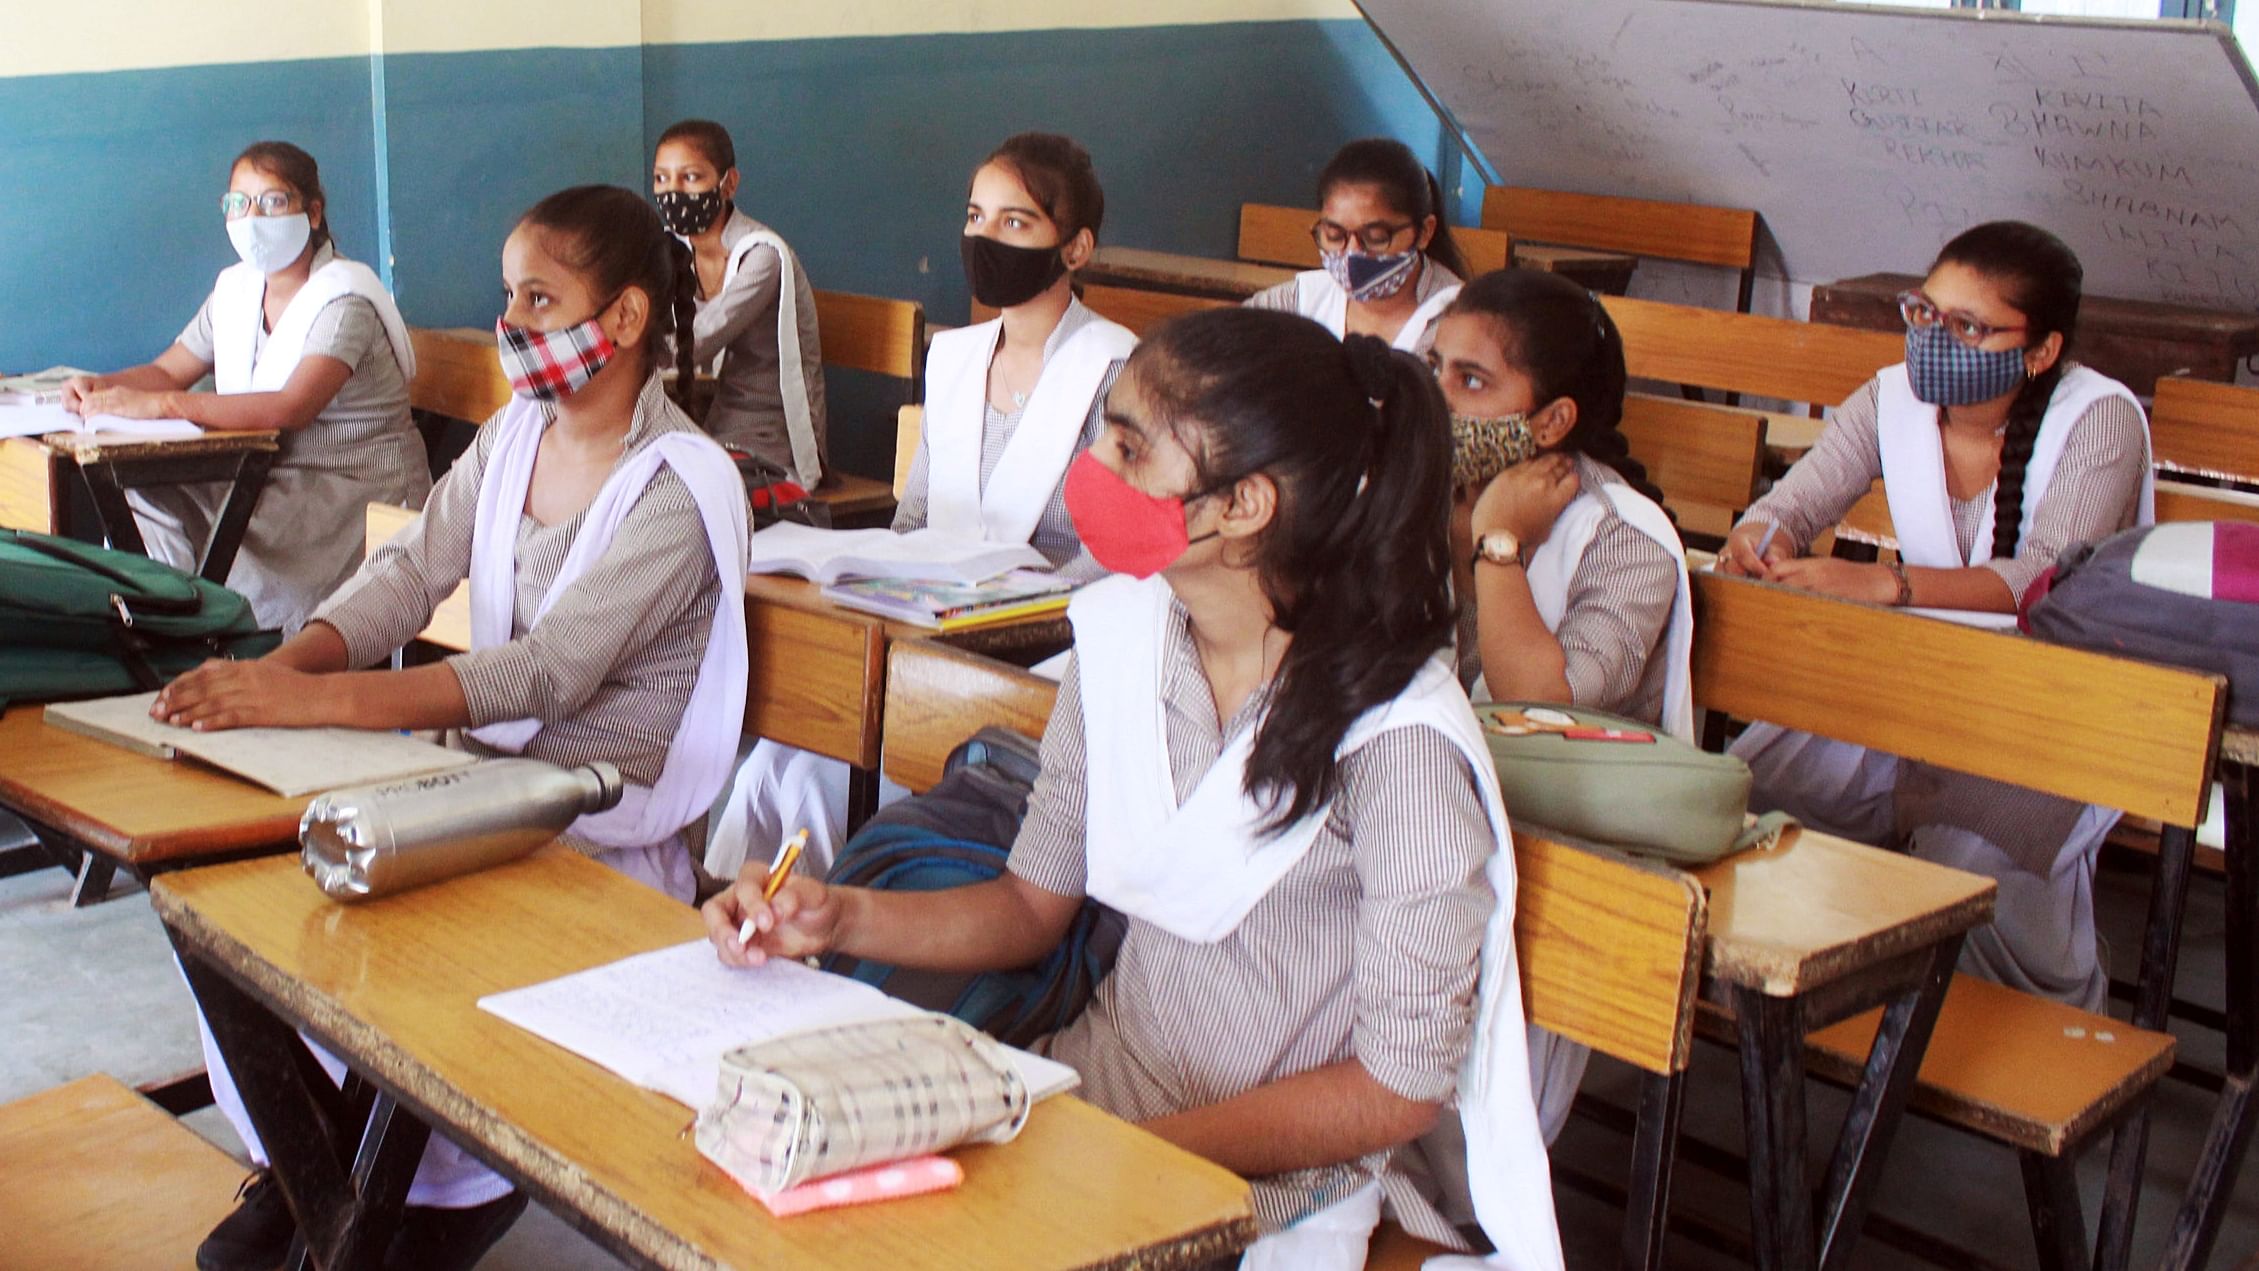 Indian School Uniform Sex Mms - Schools often become breeding grounds for rape culture. Bois Locker Room is  one instance